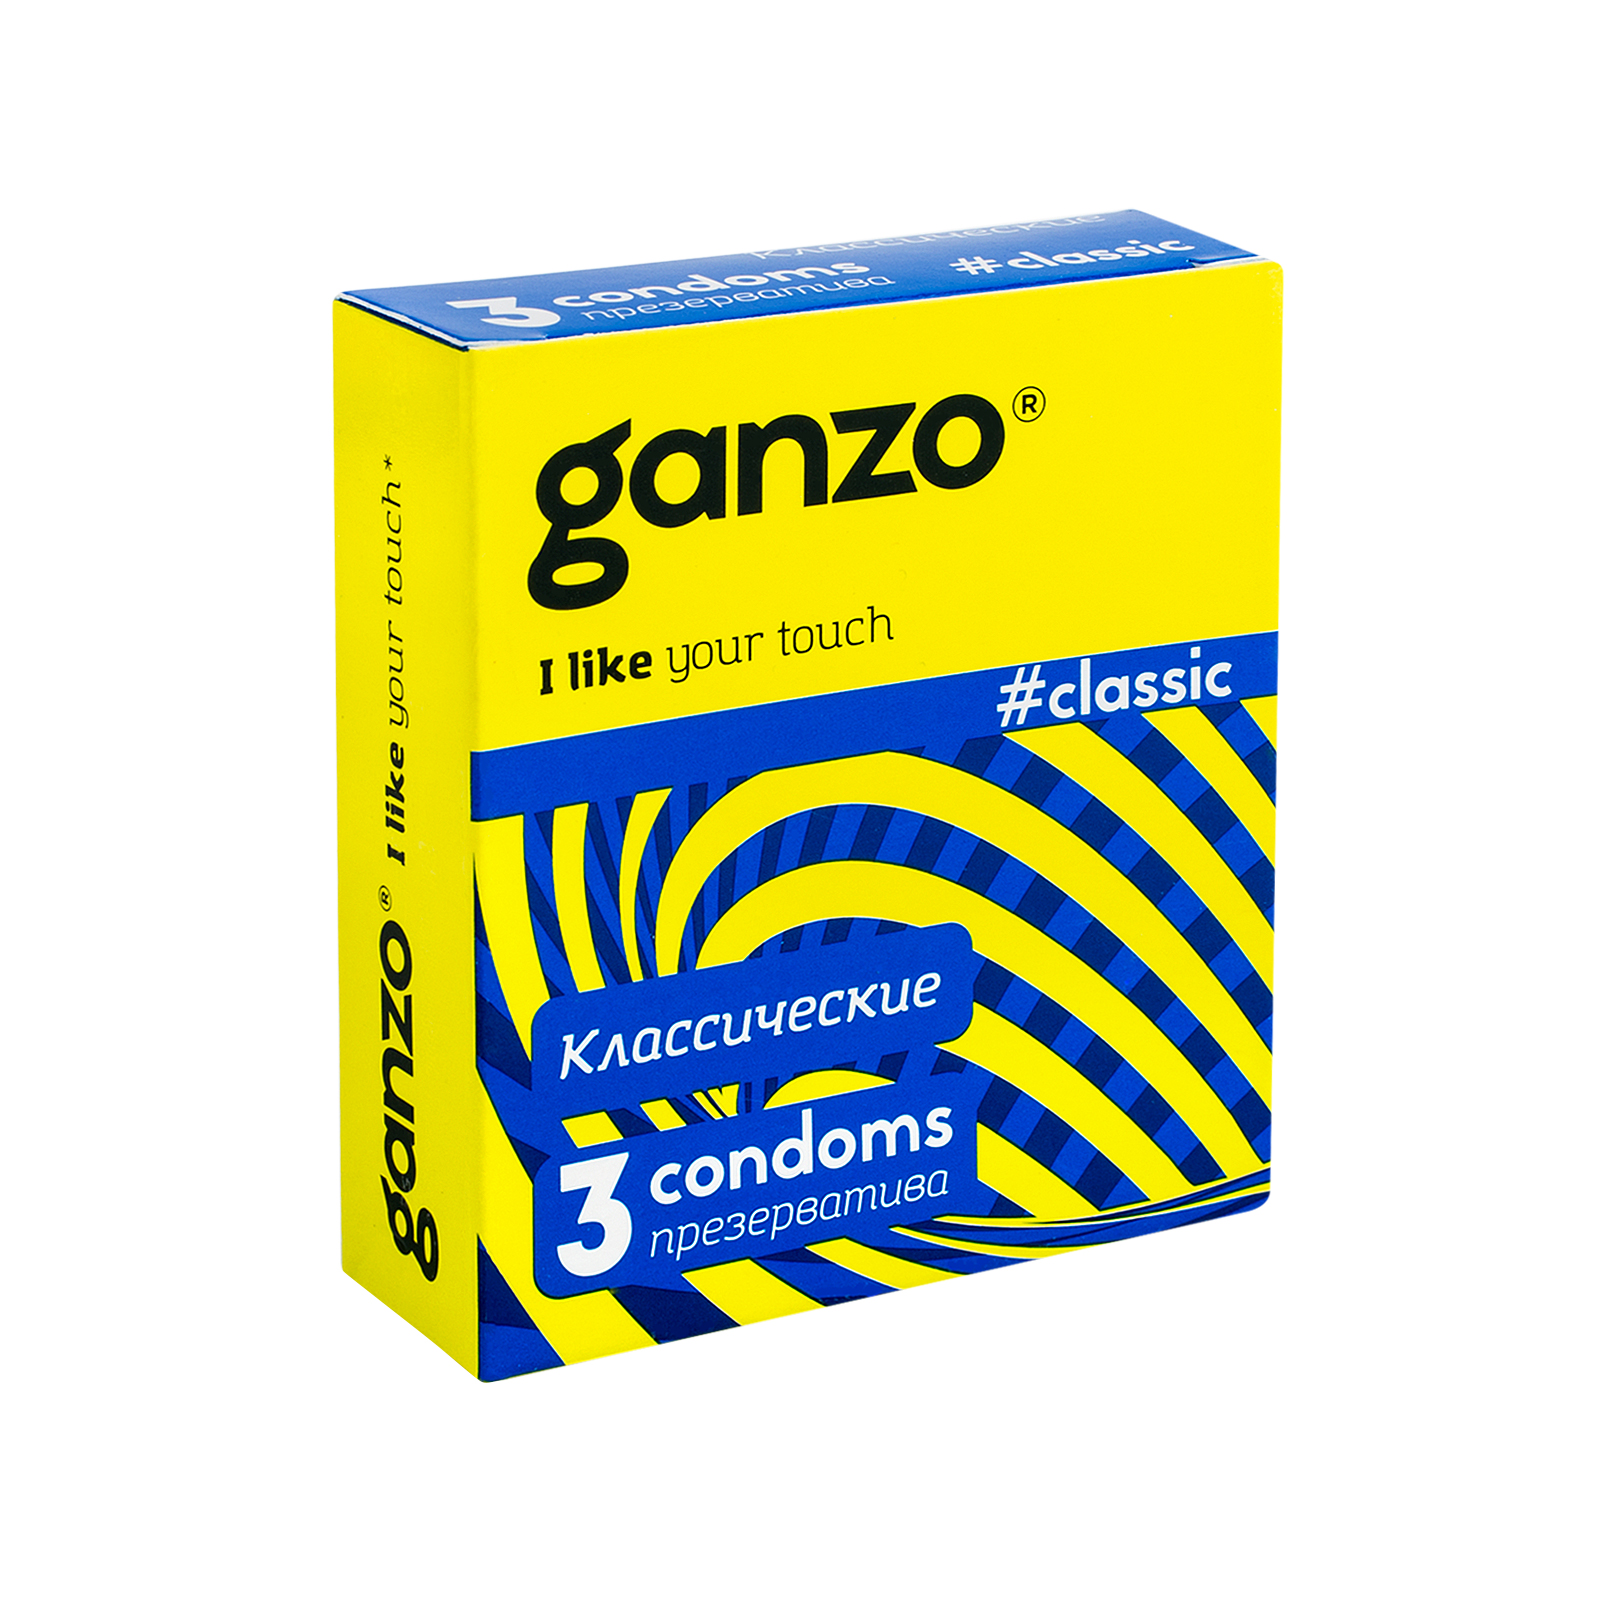 Ганзо презервативы №3 классик